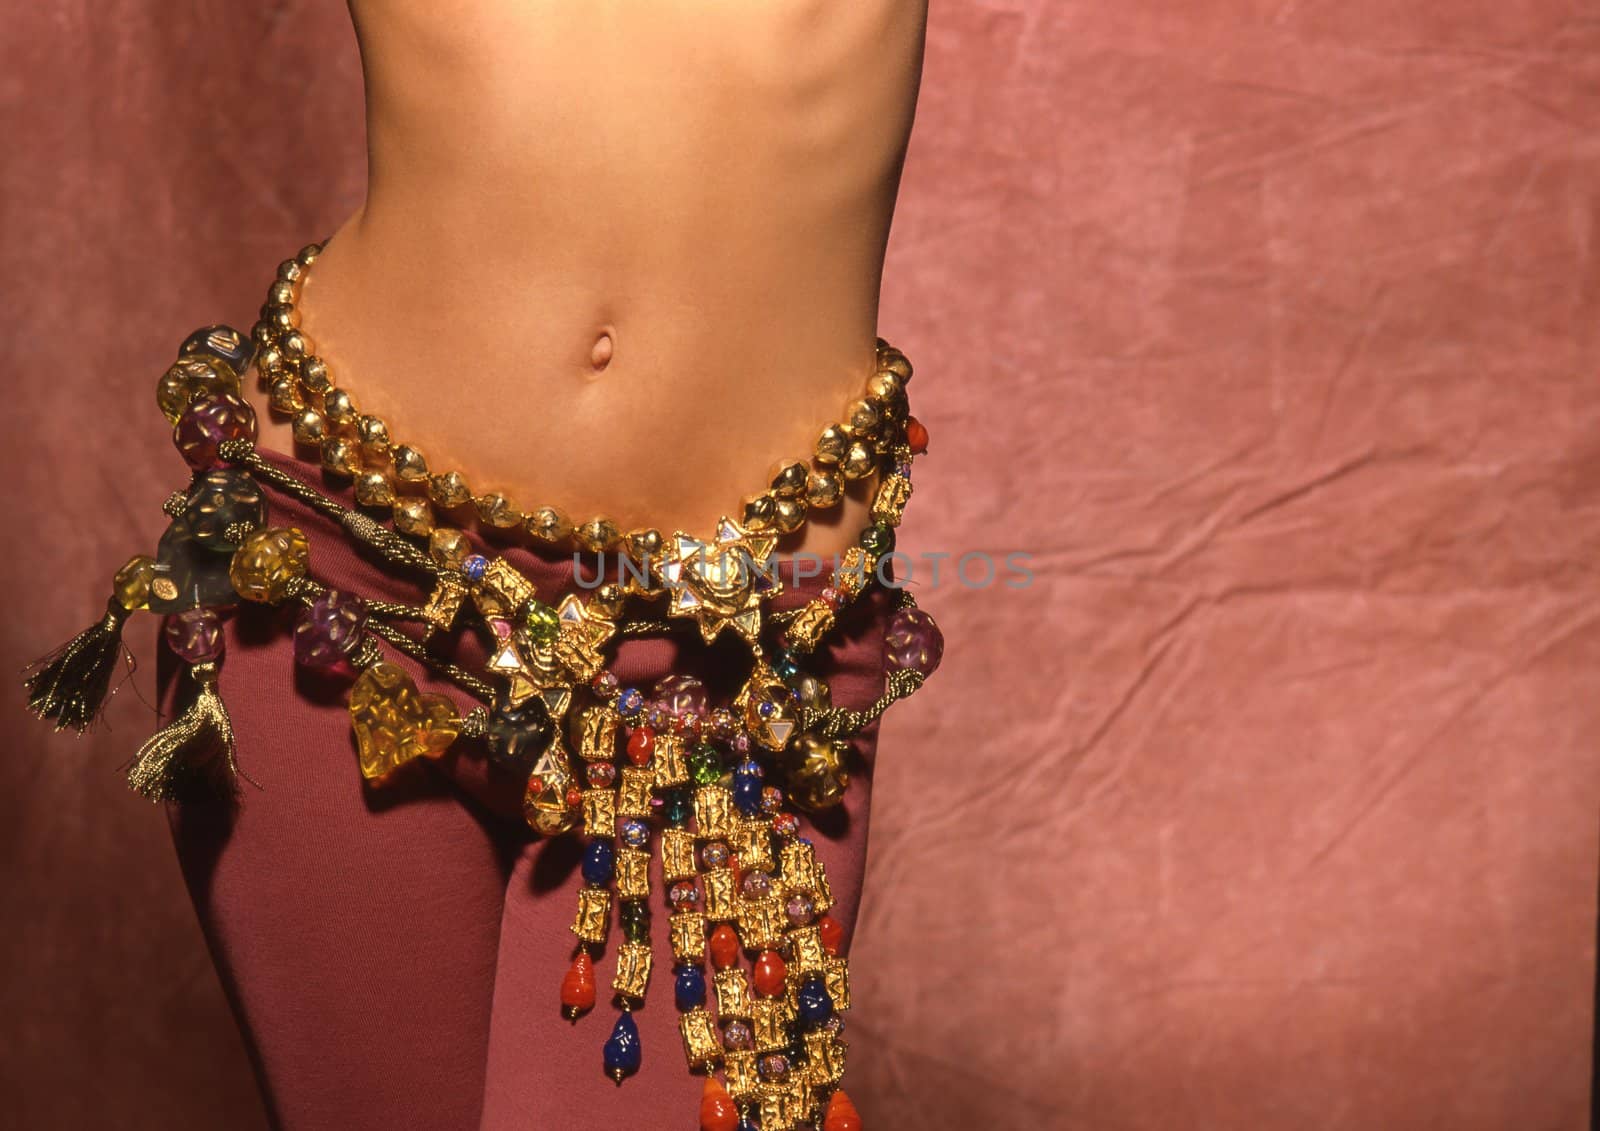 woman in jewelry in belly